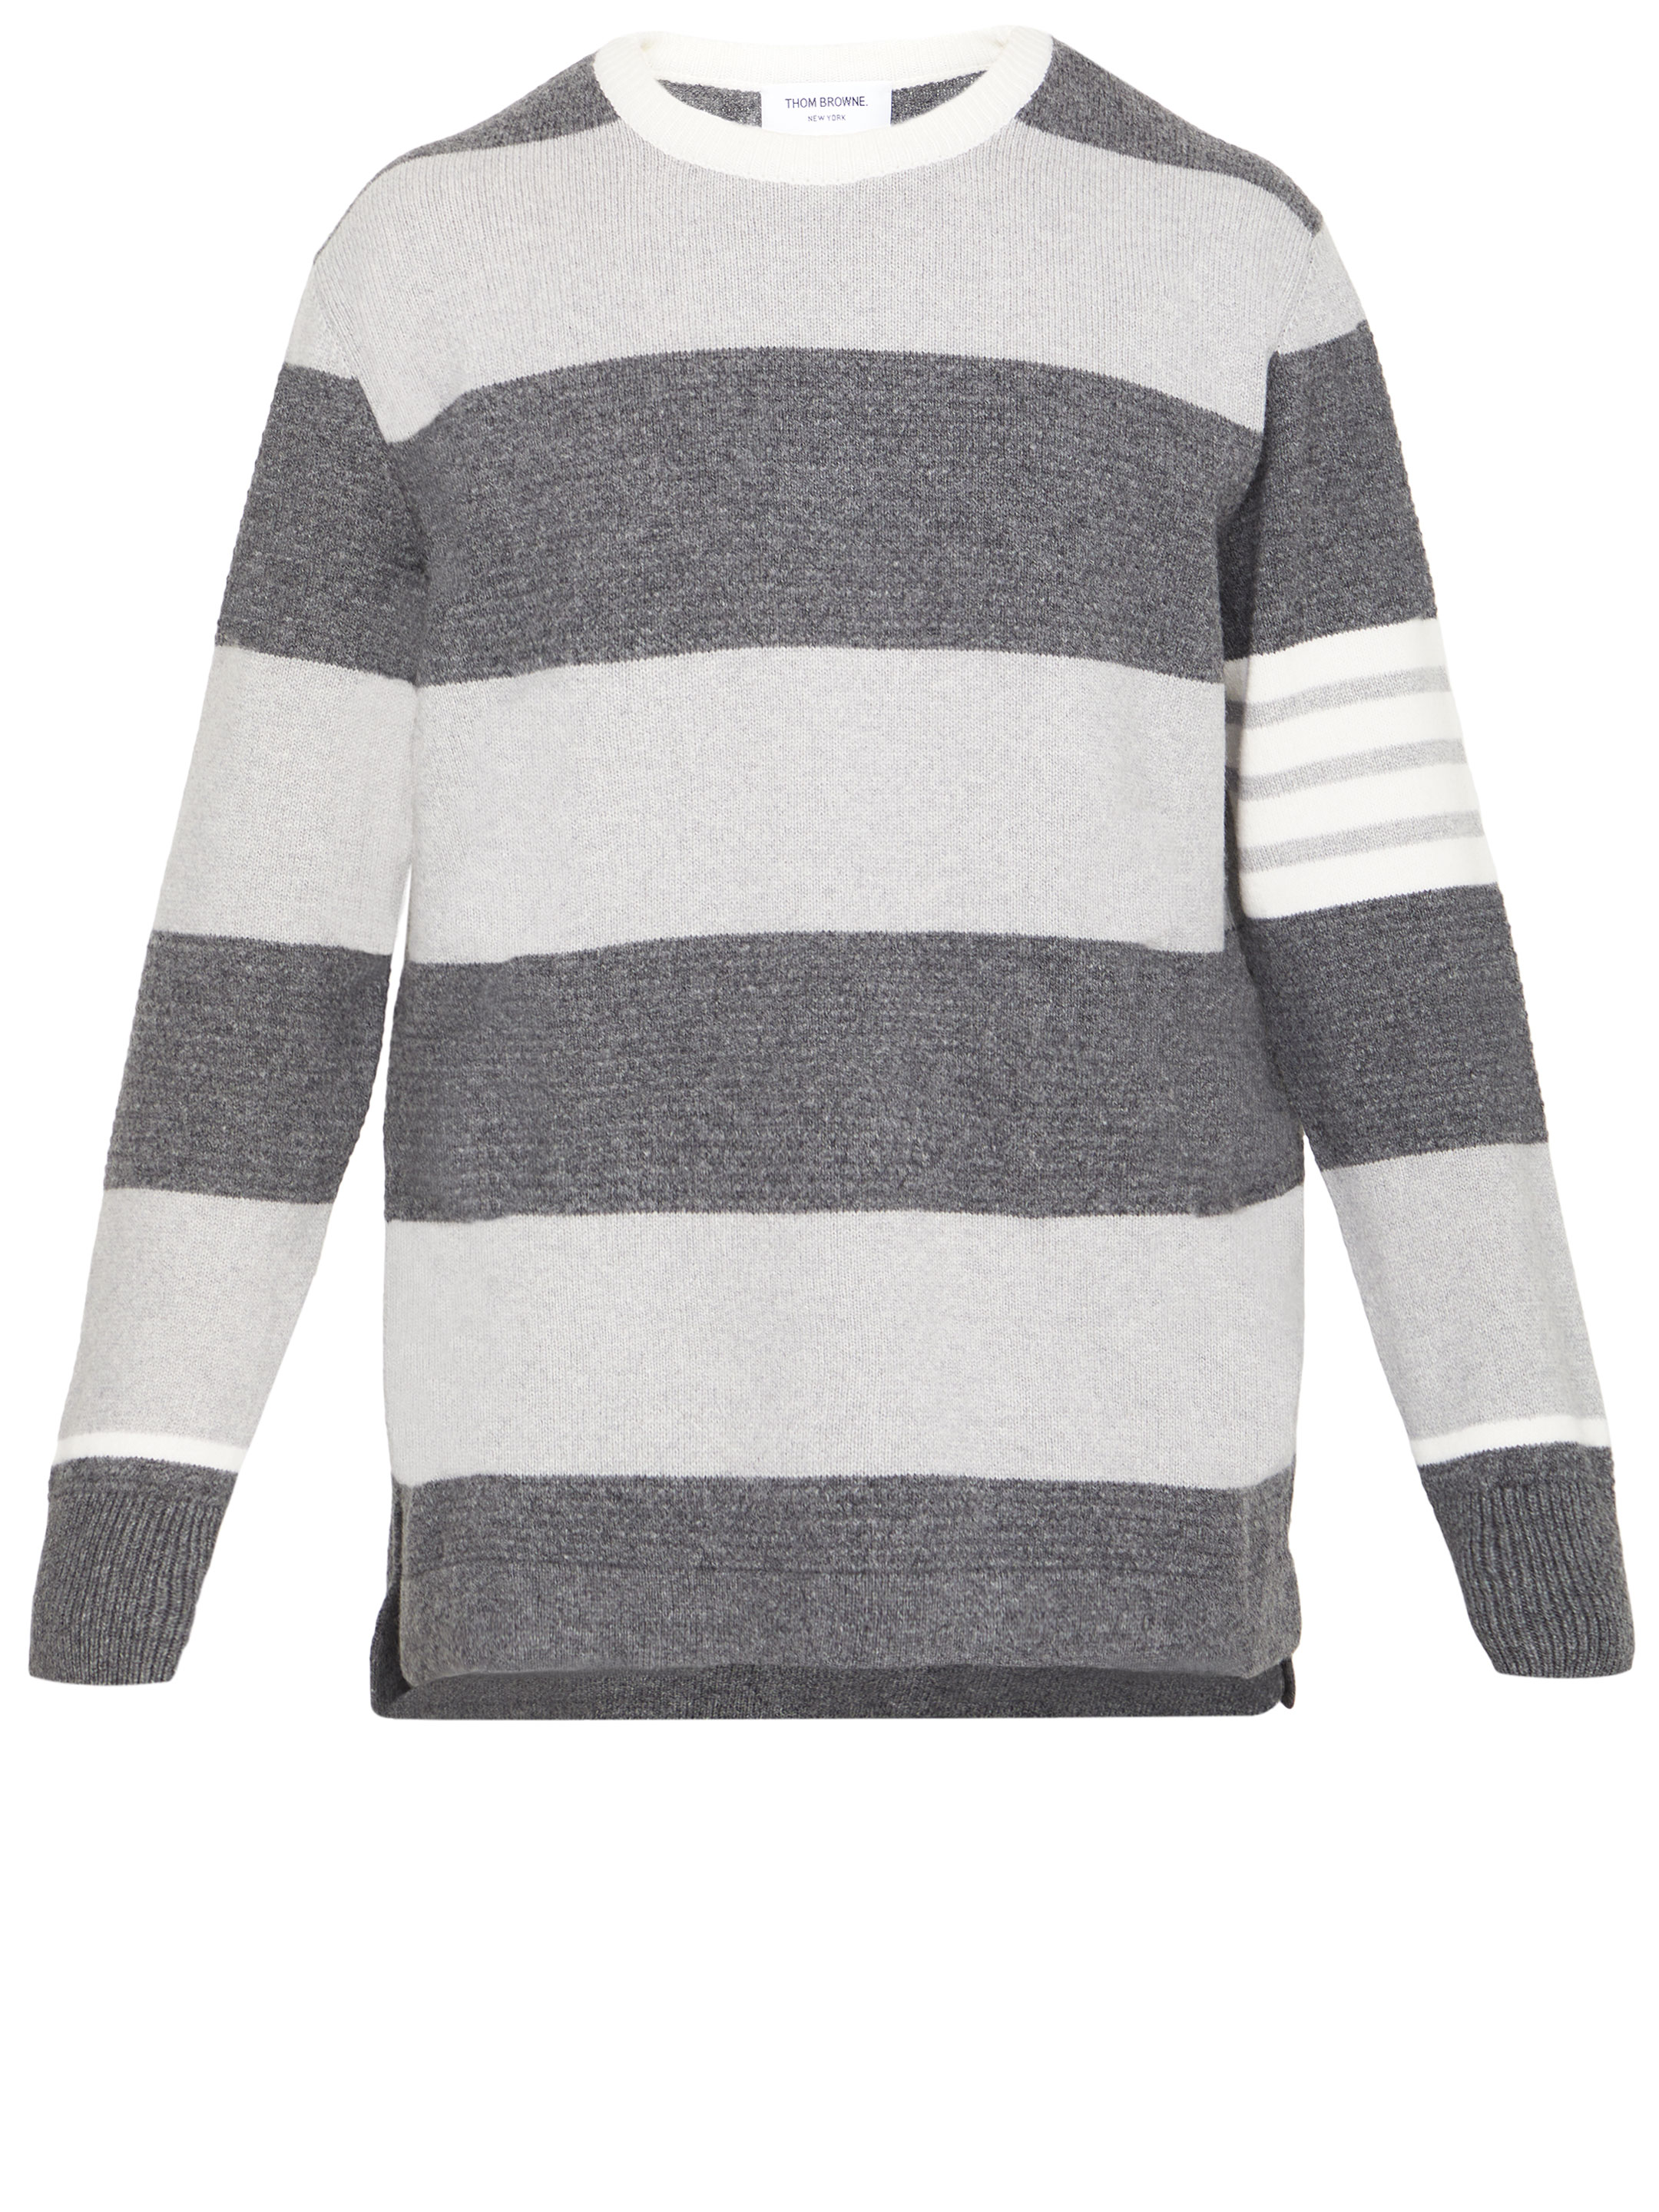 Джемпер Thom Browne Striped wool, серый